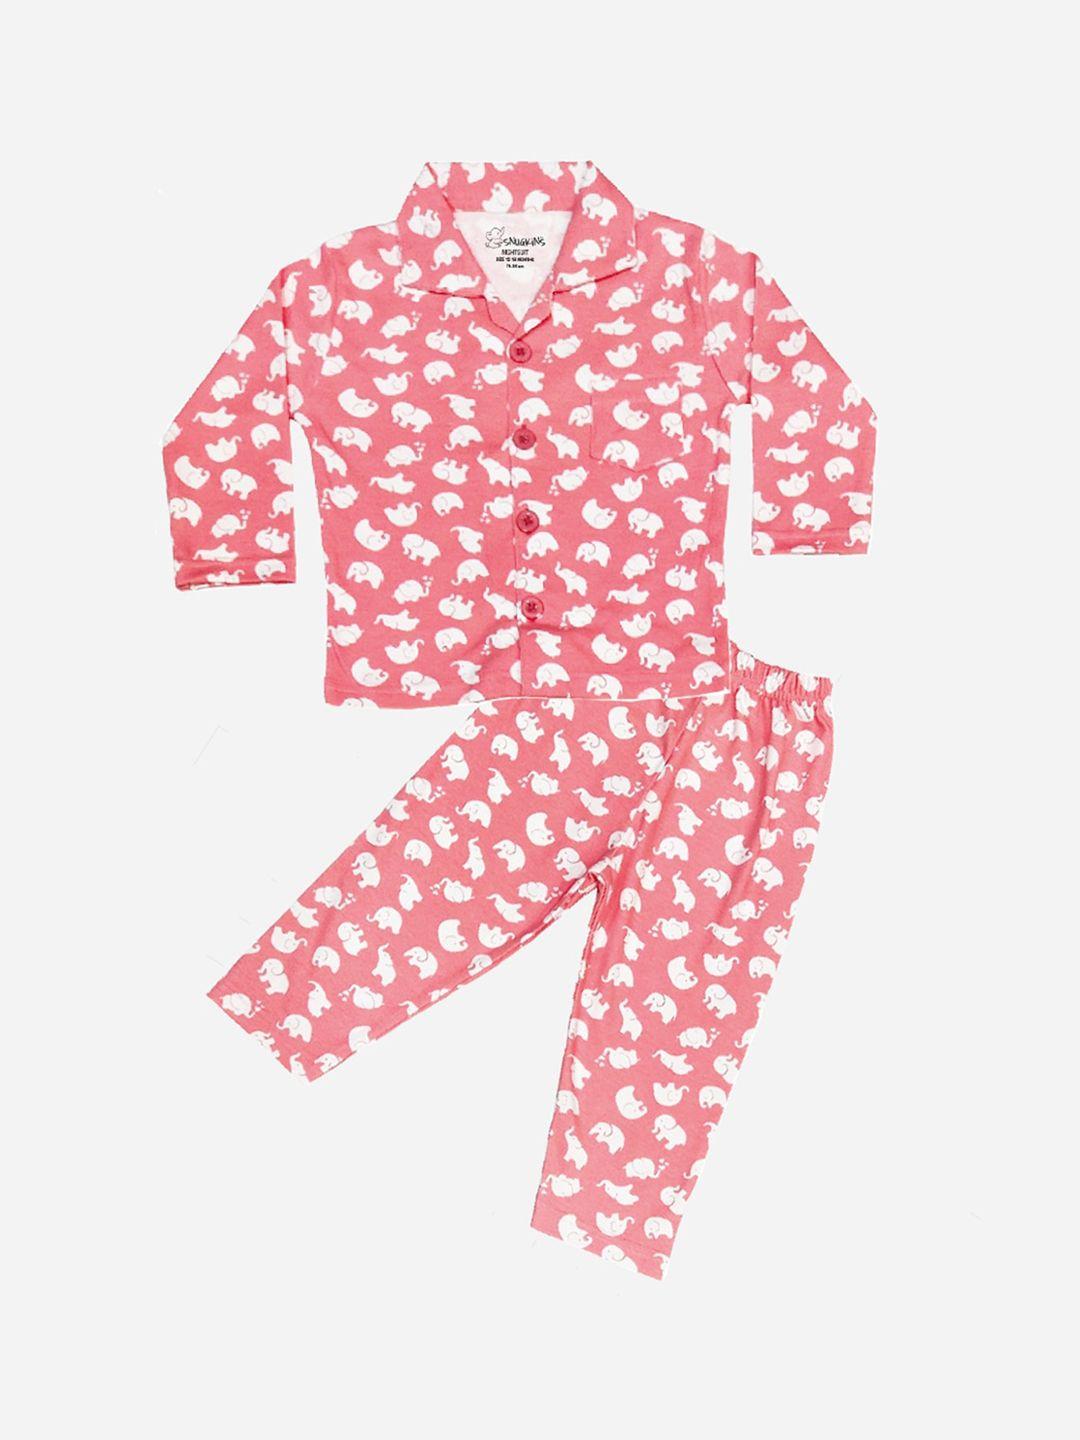 snugkins kids graphic printed pure cotton shirt with pyjamas